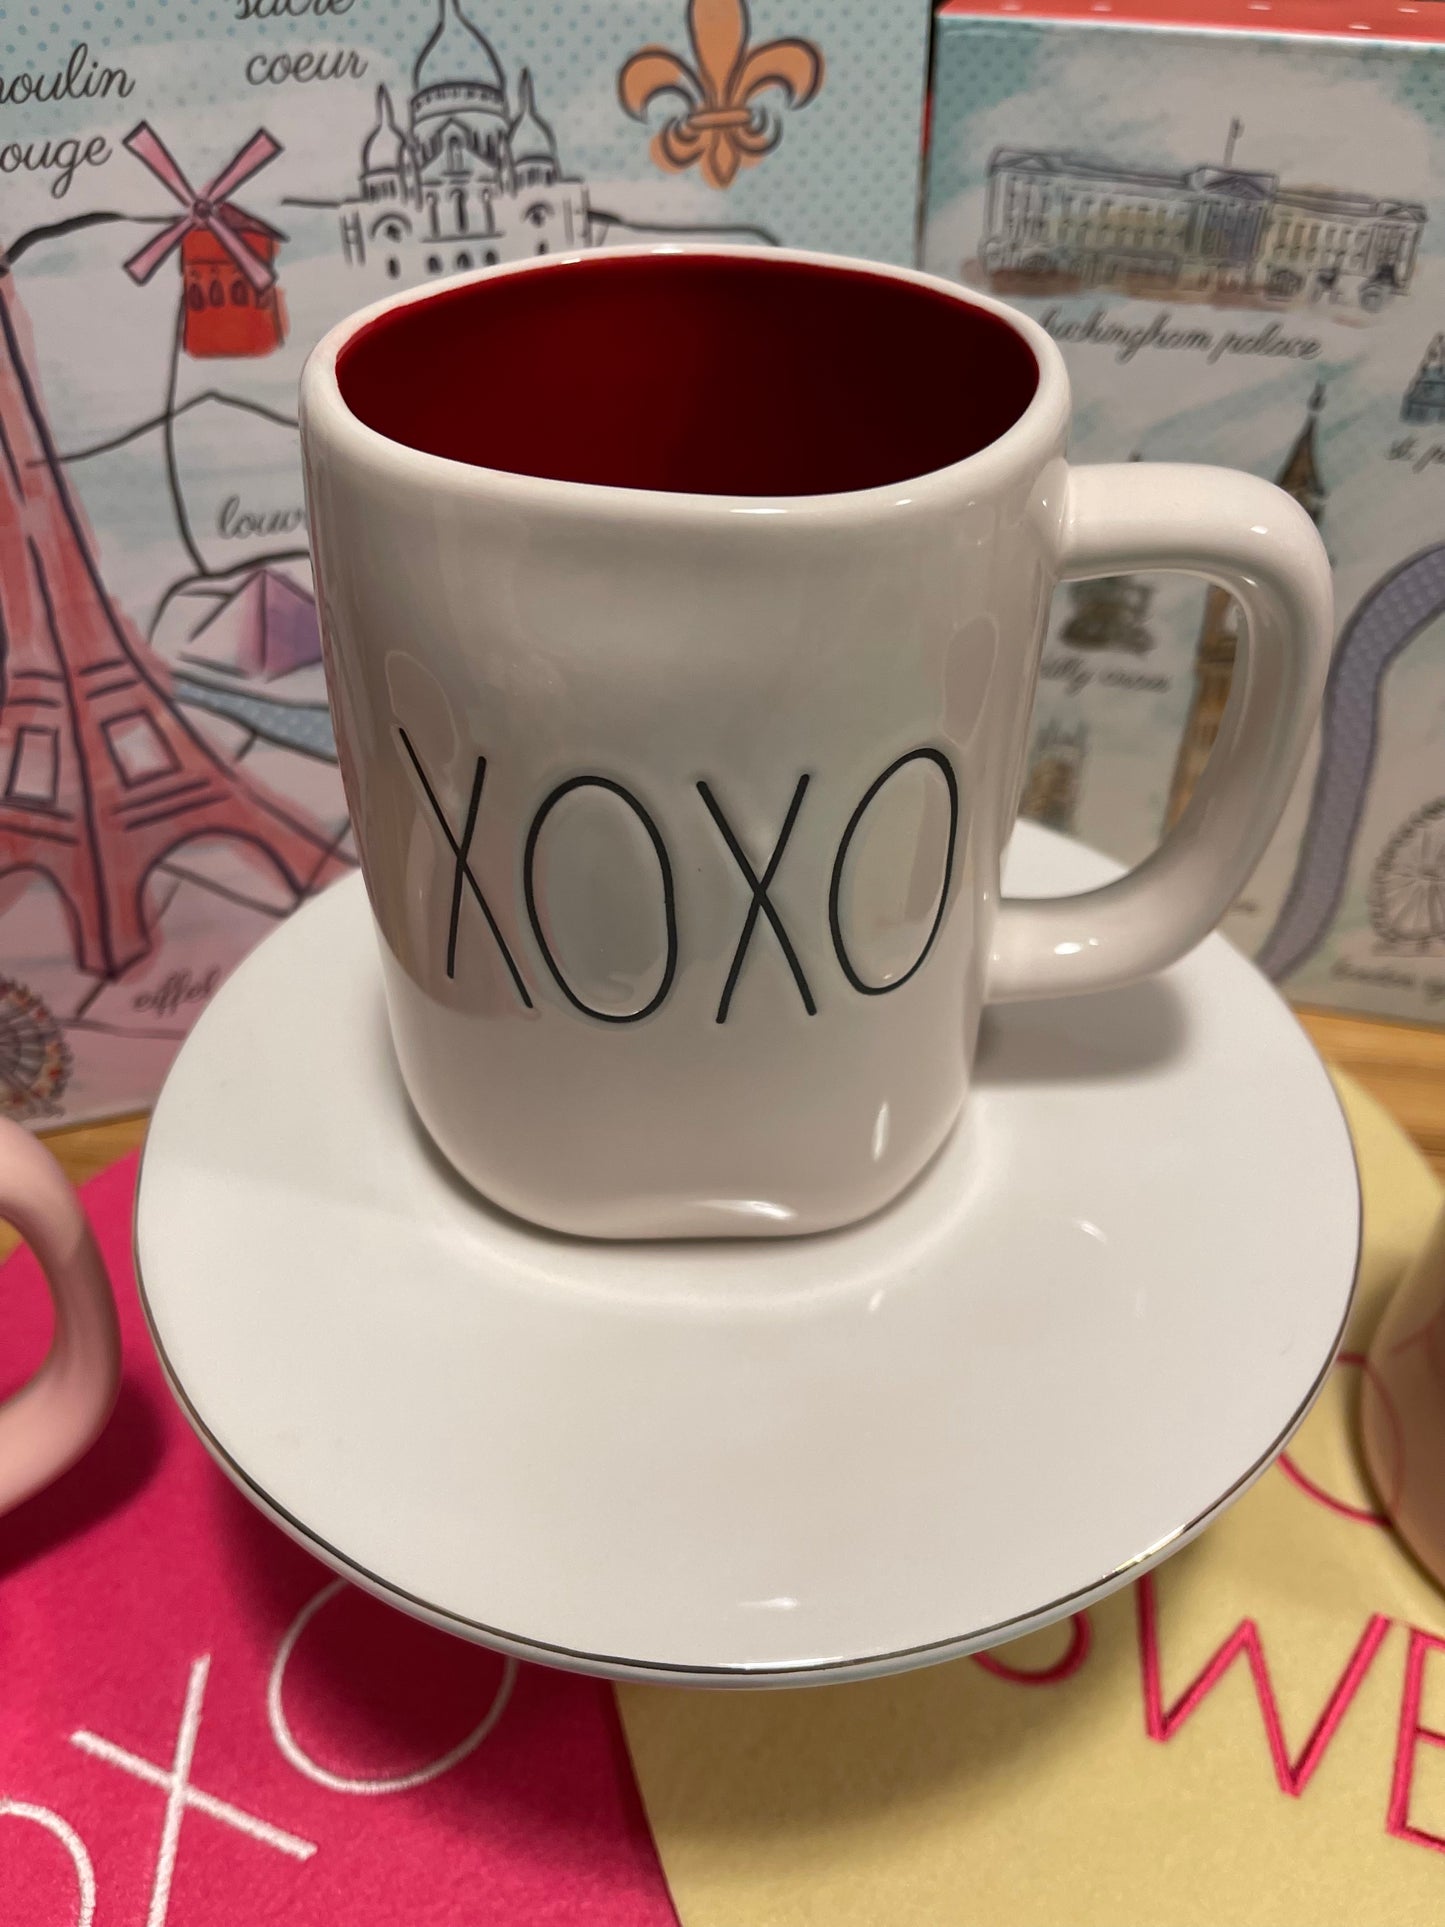 XOXO Cup